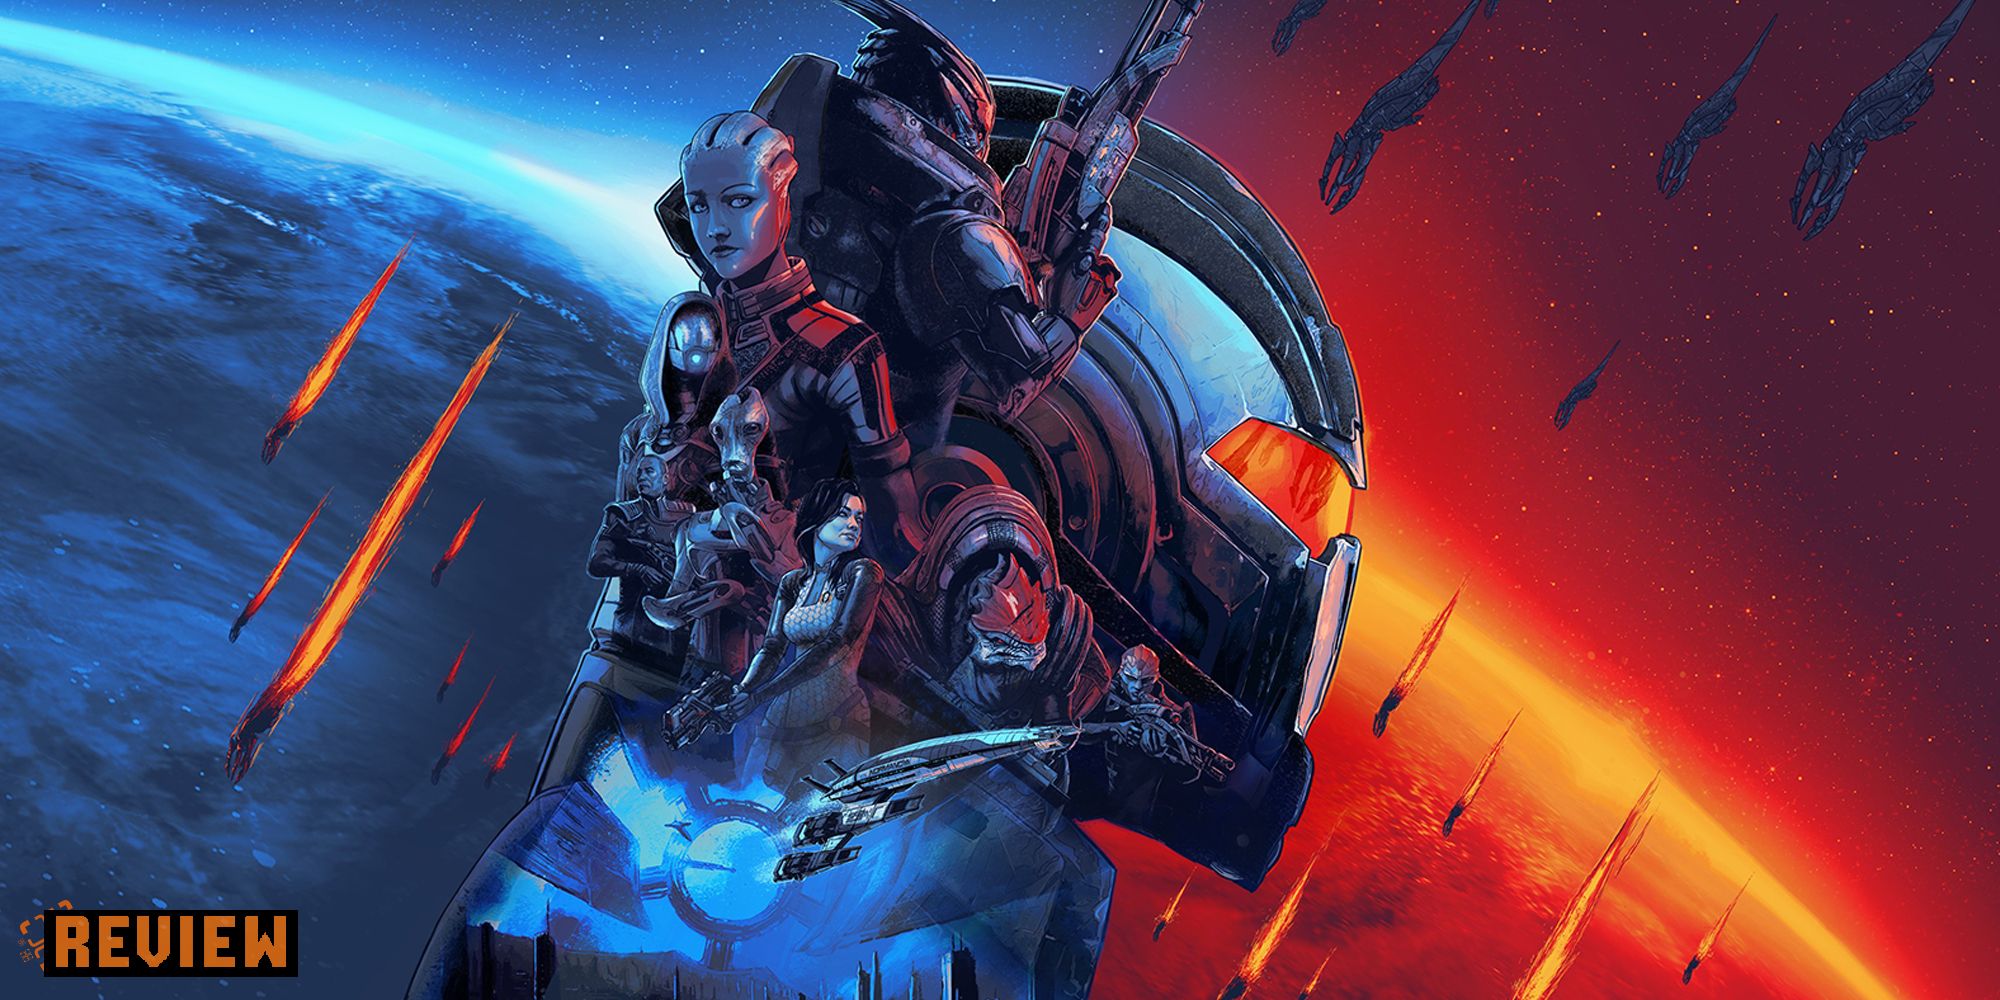 Cover art from Mass Effect Legendary Edition.